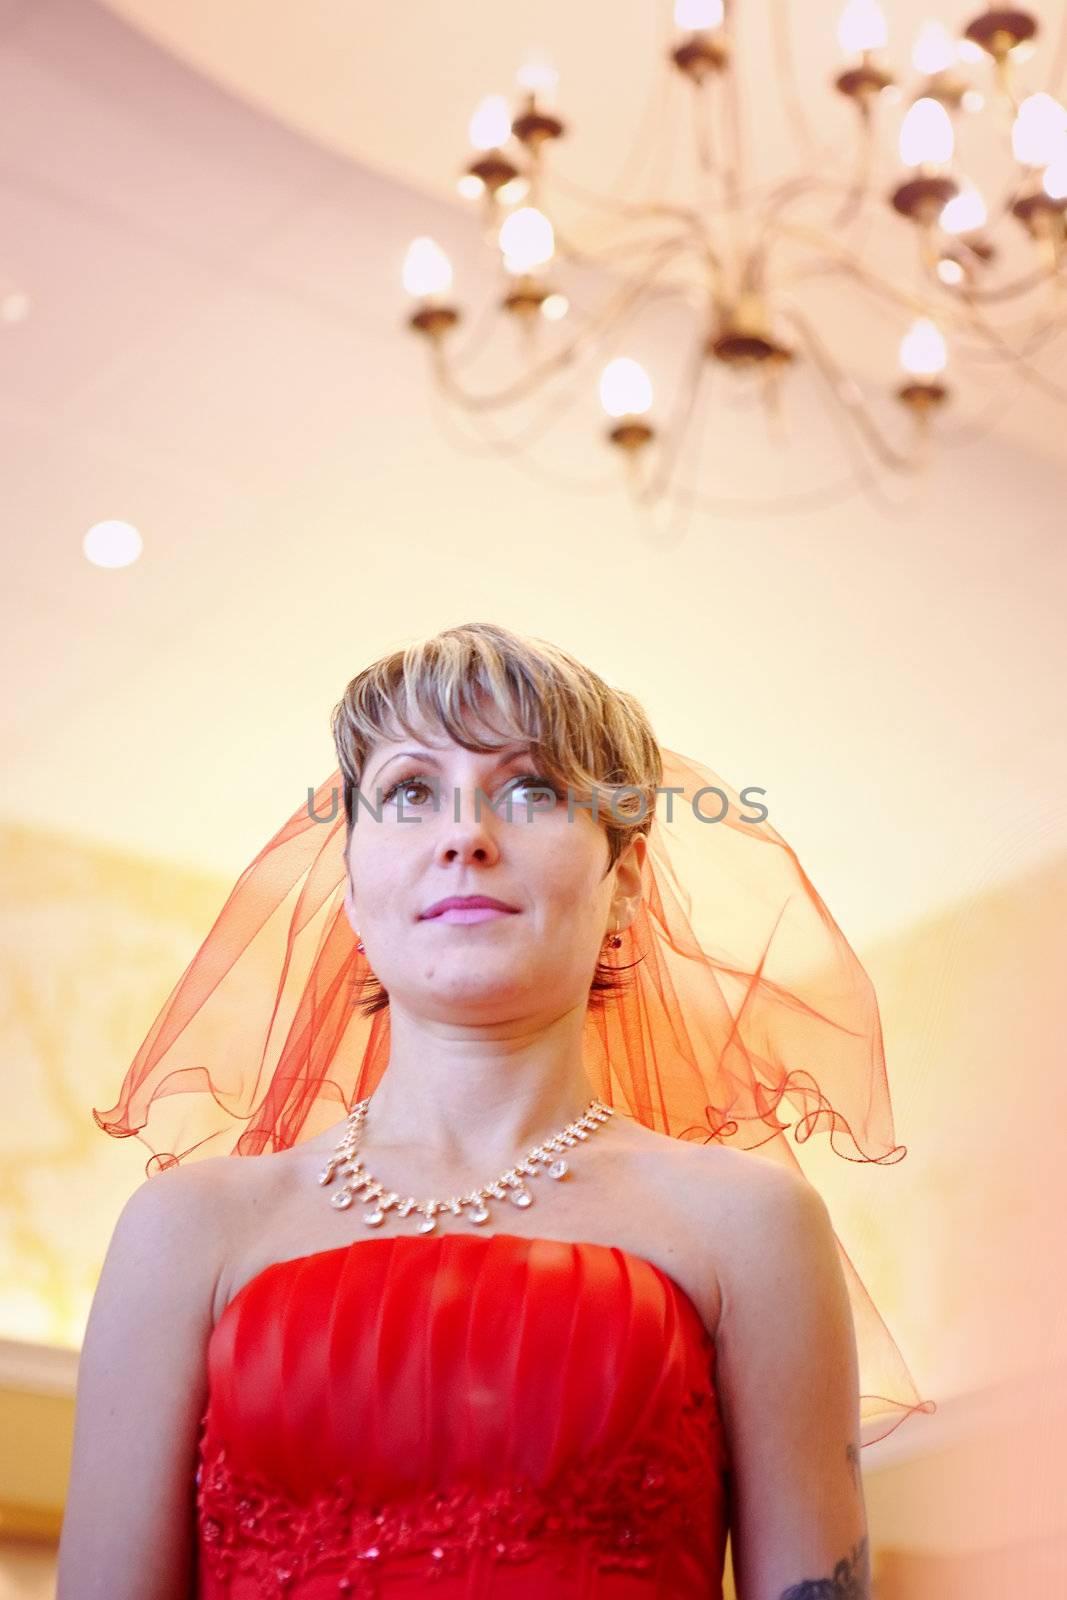 The girl bride in a red dress by Azaliya